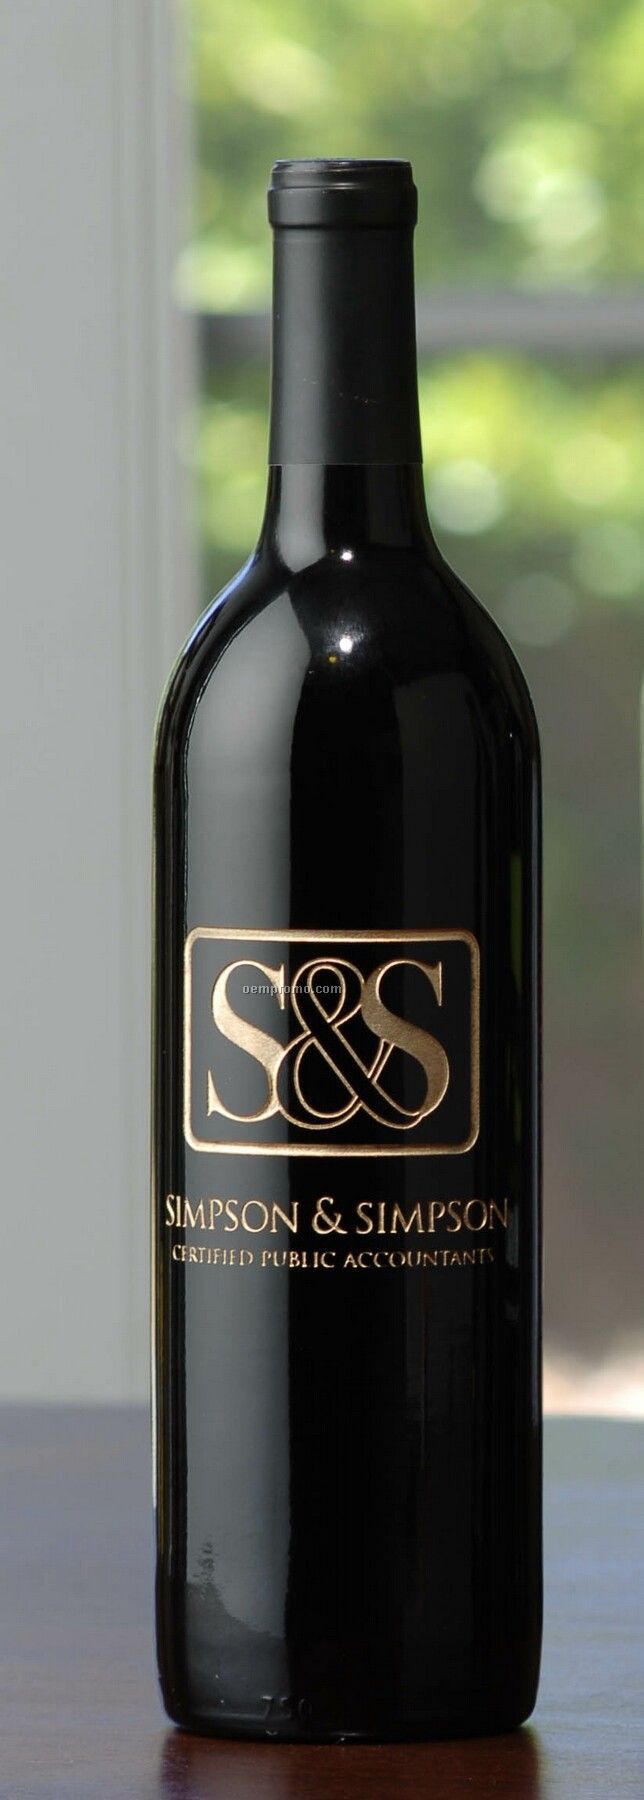 2009 Wv Chardonnay, Sonoma County, Barrel Fermented (Etched Wine)